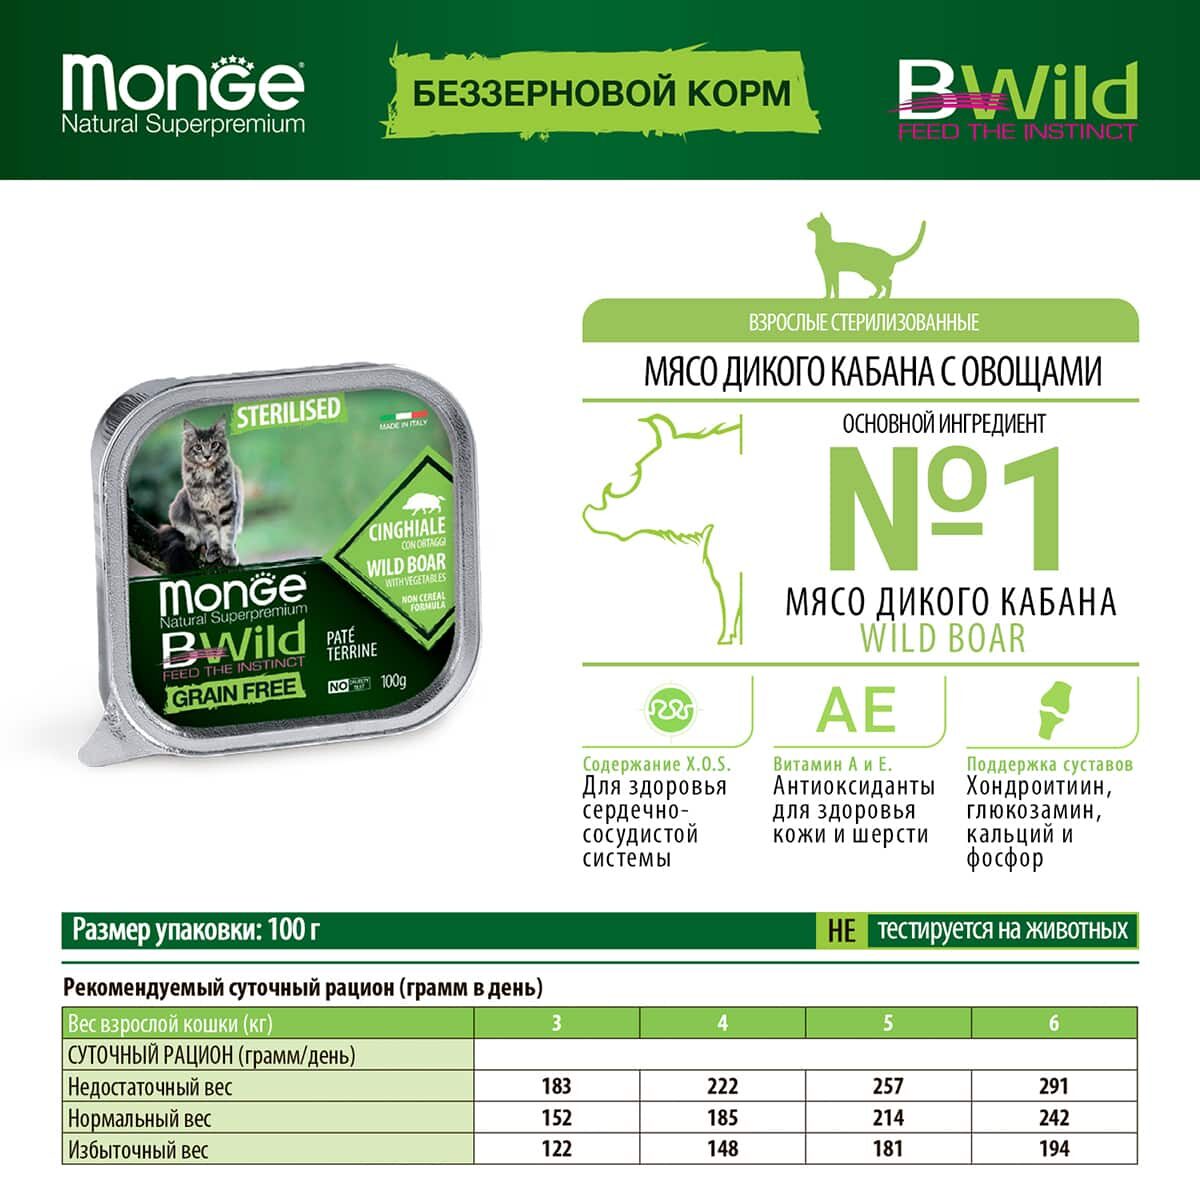 Monge Cat BWild Grain free Sterilised Wild Boar with vegetables (100г)